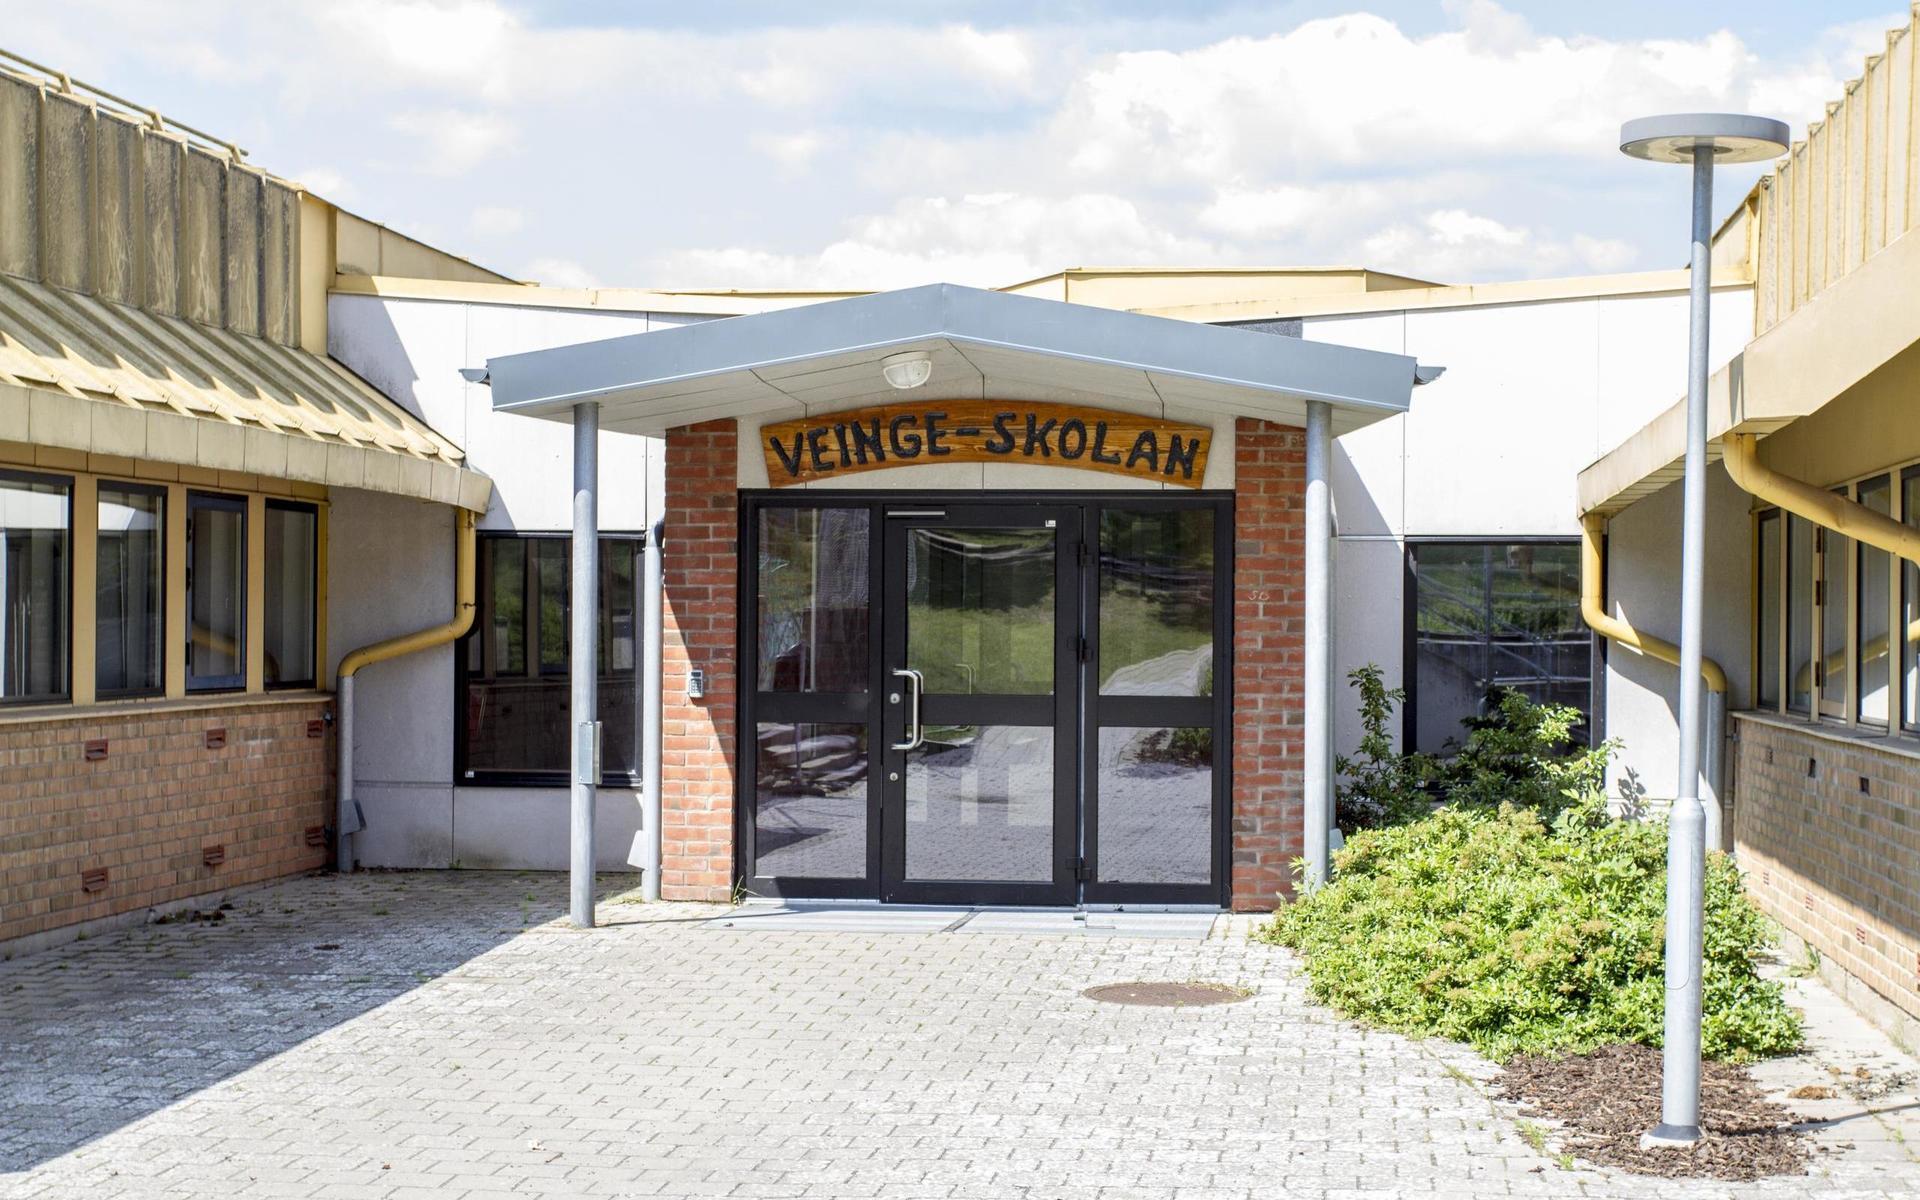 Veingeskolan i Veinge, Laholm. 